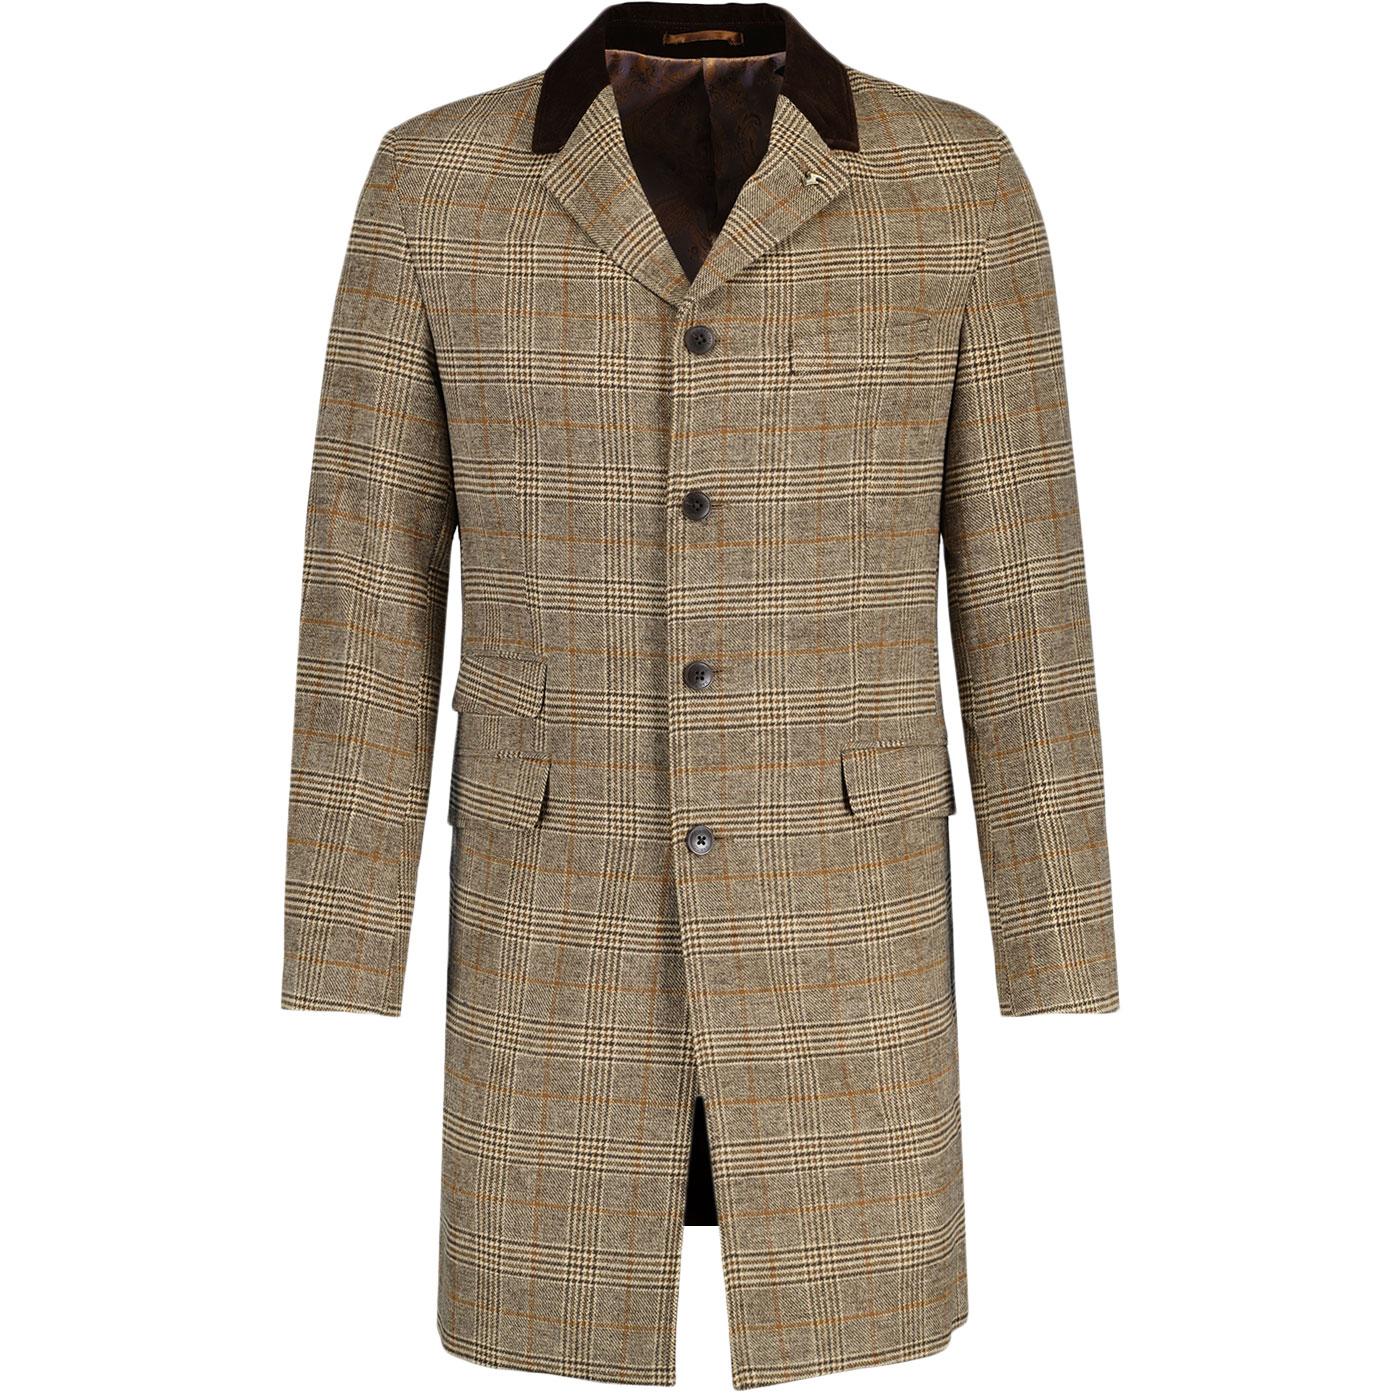 Statham Gabicci Vintage Check Mod Overcoat (Camel)